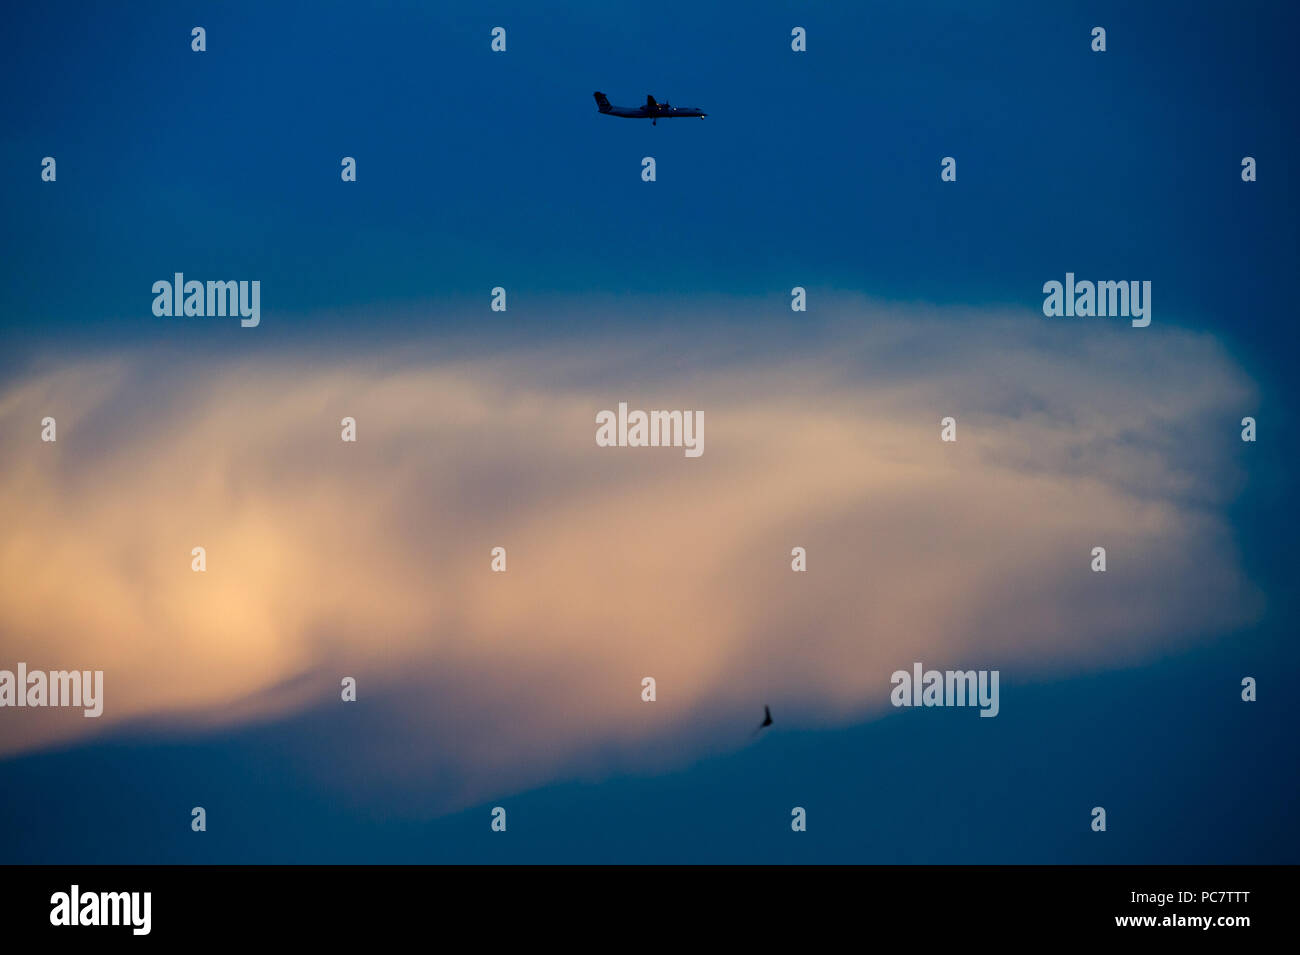 Cumulonimbus cloud in Gdansk, Poland. July 28th 2018 © Wojciech Strozyk / Alamy Stock Photo *** Local Caption *** Stock Photo